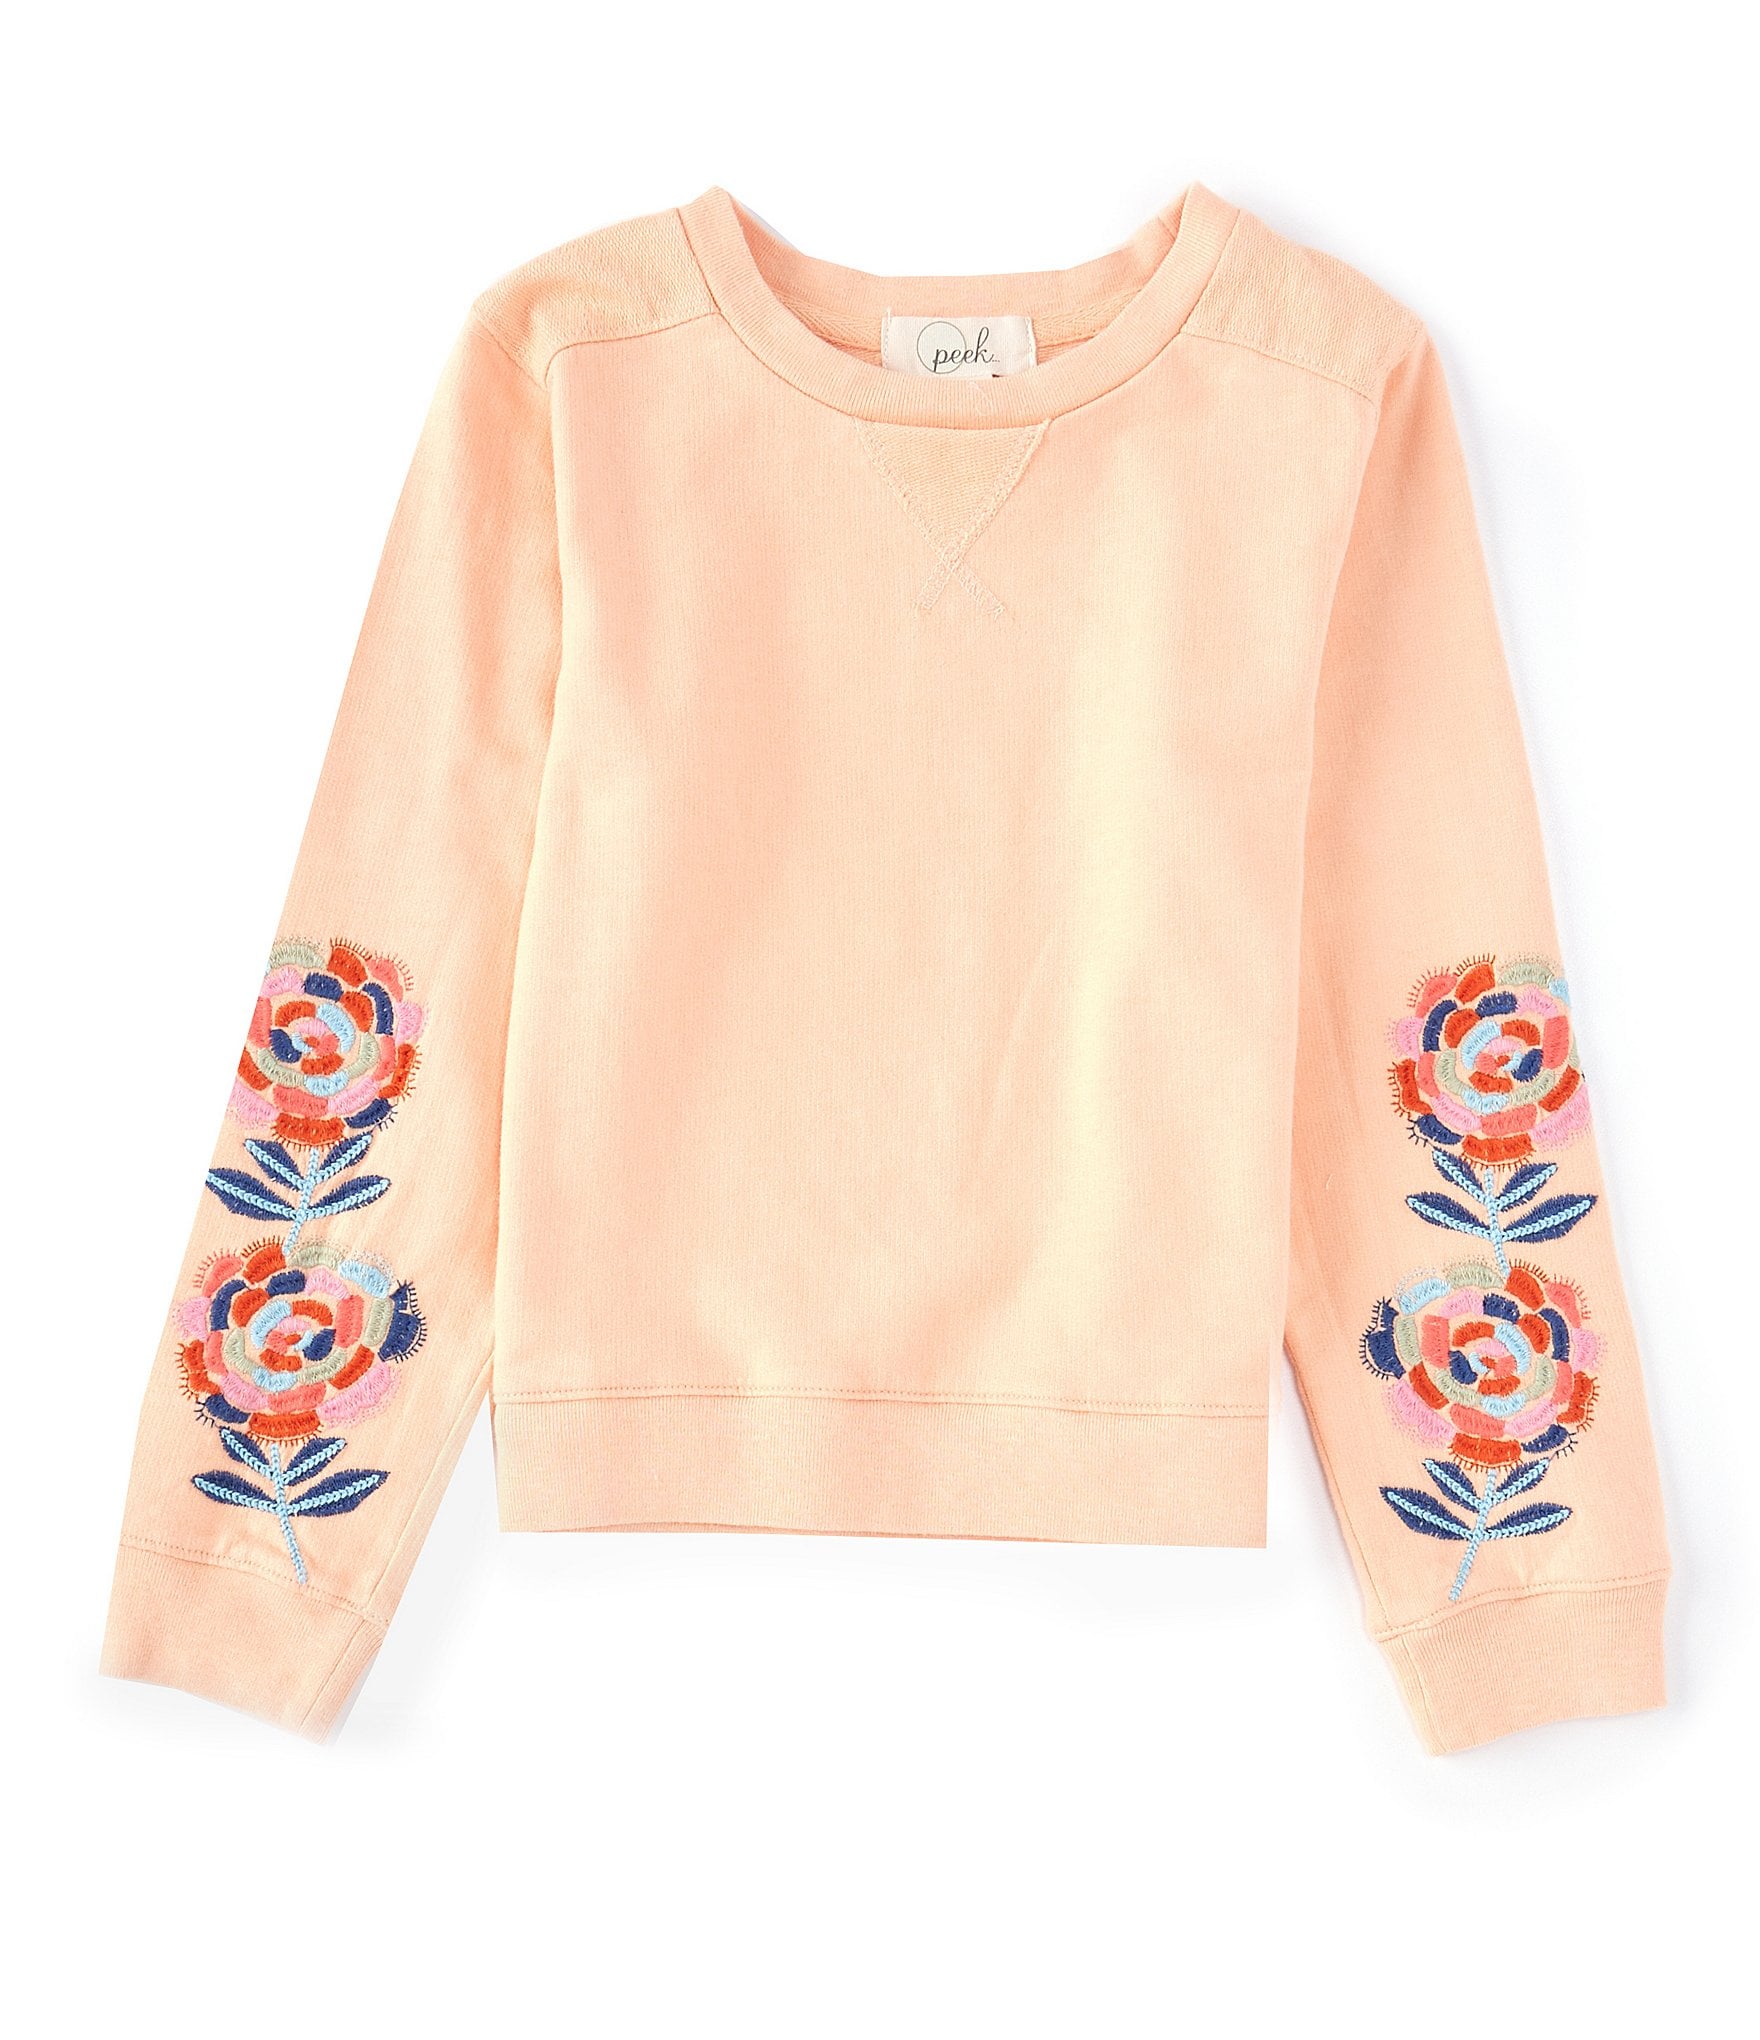 Peek Little/Big Girls 2T-12 Long Sleeve Rose Embroidered Sweatshirt ...